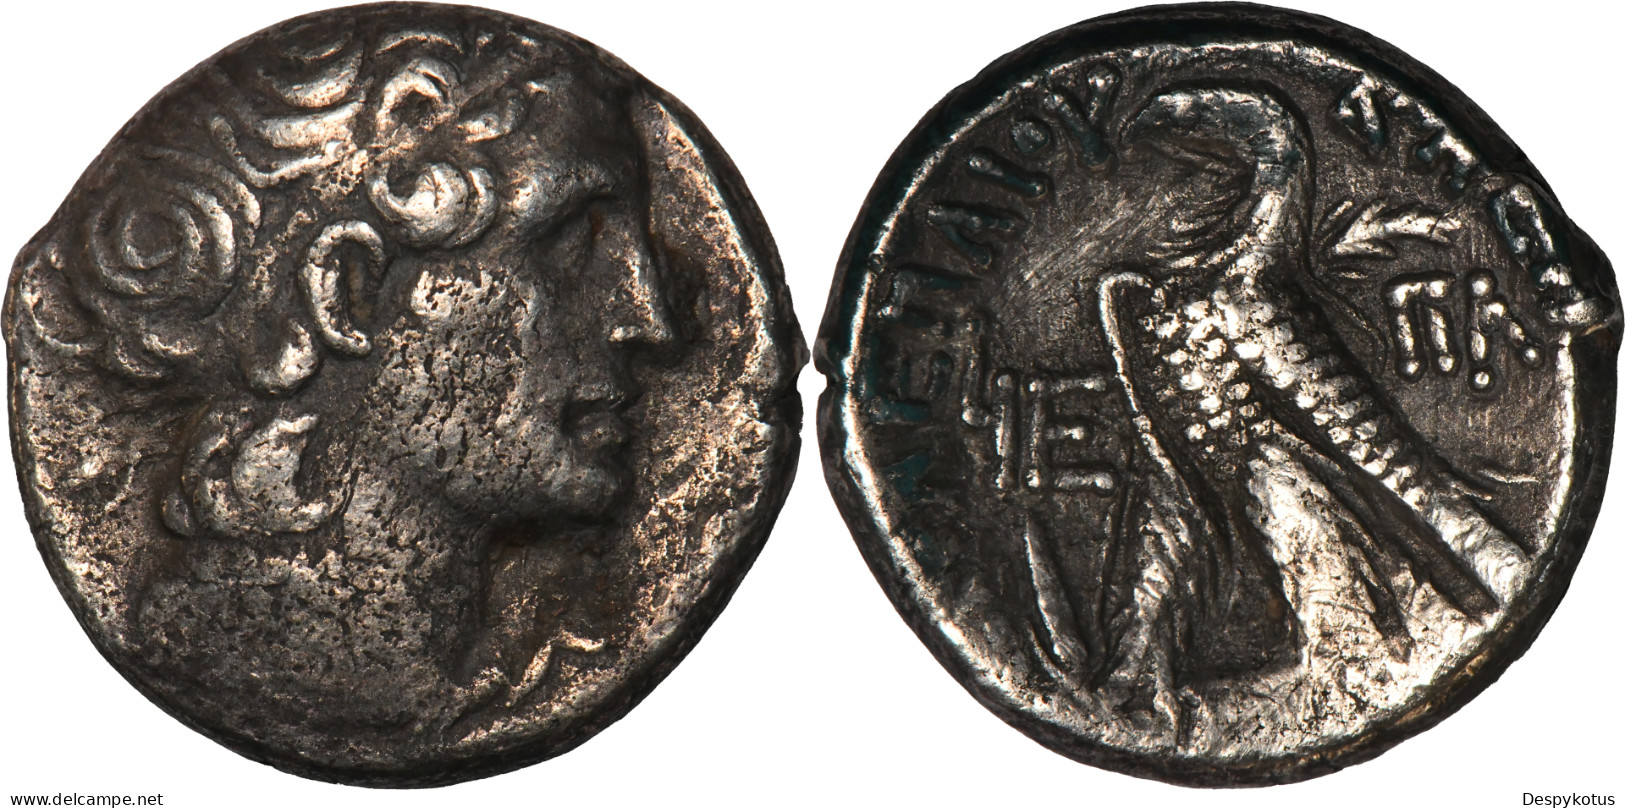 GRECE ANTIQUE - Tetradrachme - EGYPTE, Alexandrie - Cléopatre VII / Ptolémée XV - TRES RARE - 19-270 - Griechische Münzen